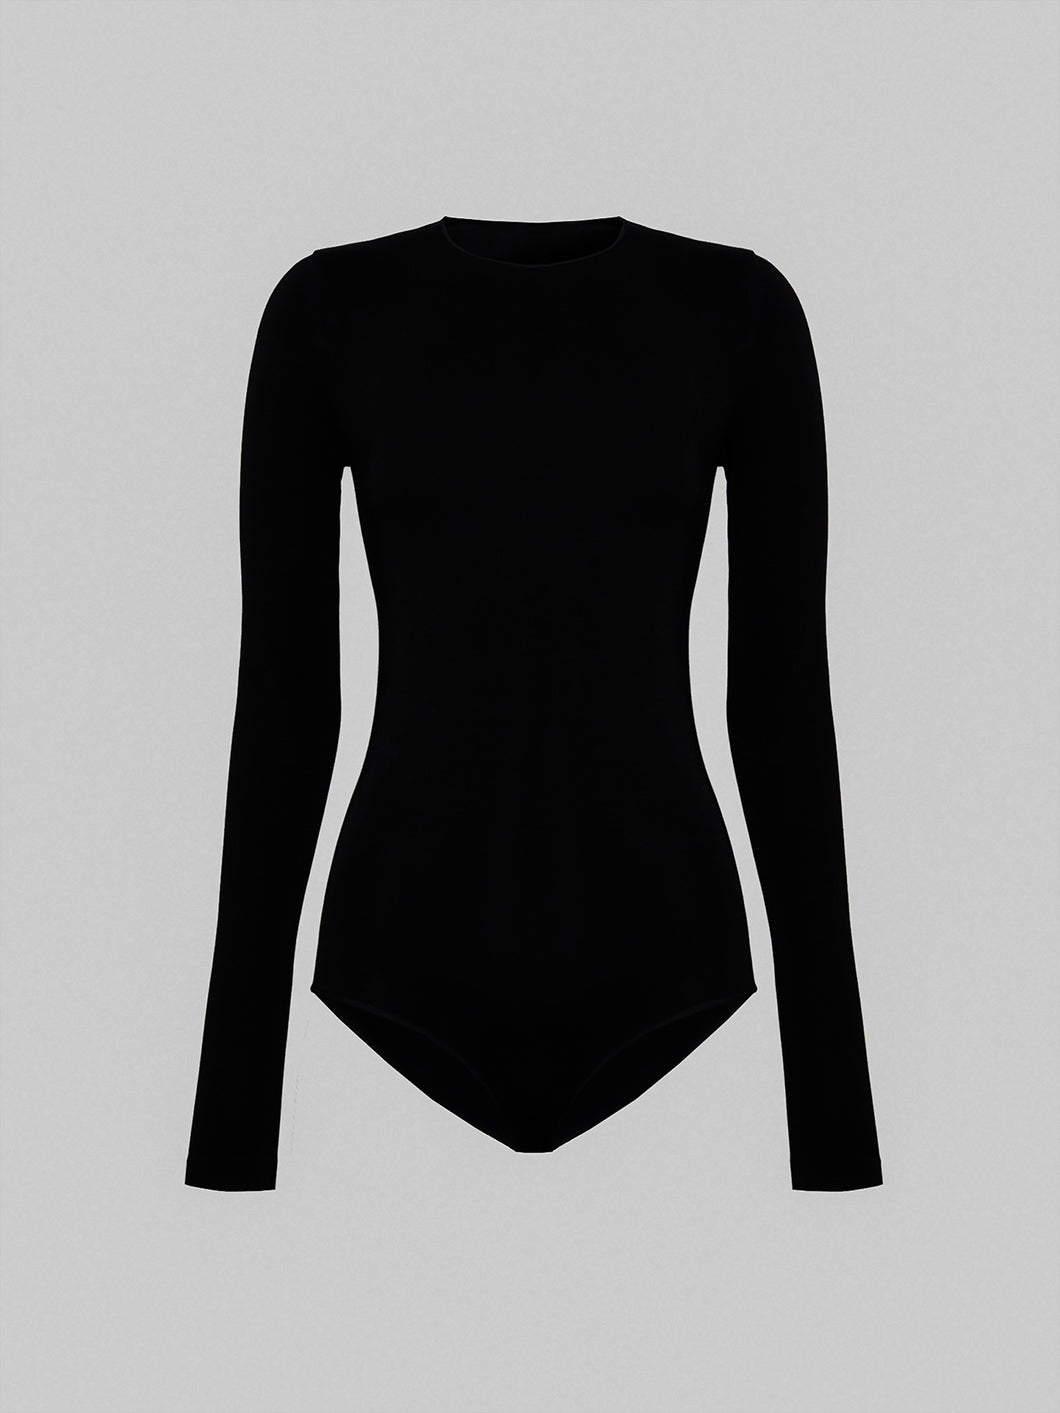 Wolford - The Round Neck Bodysuit - Black